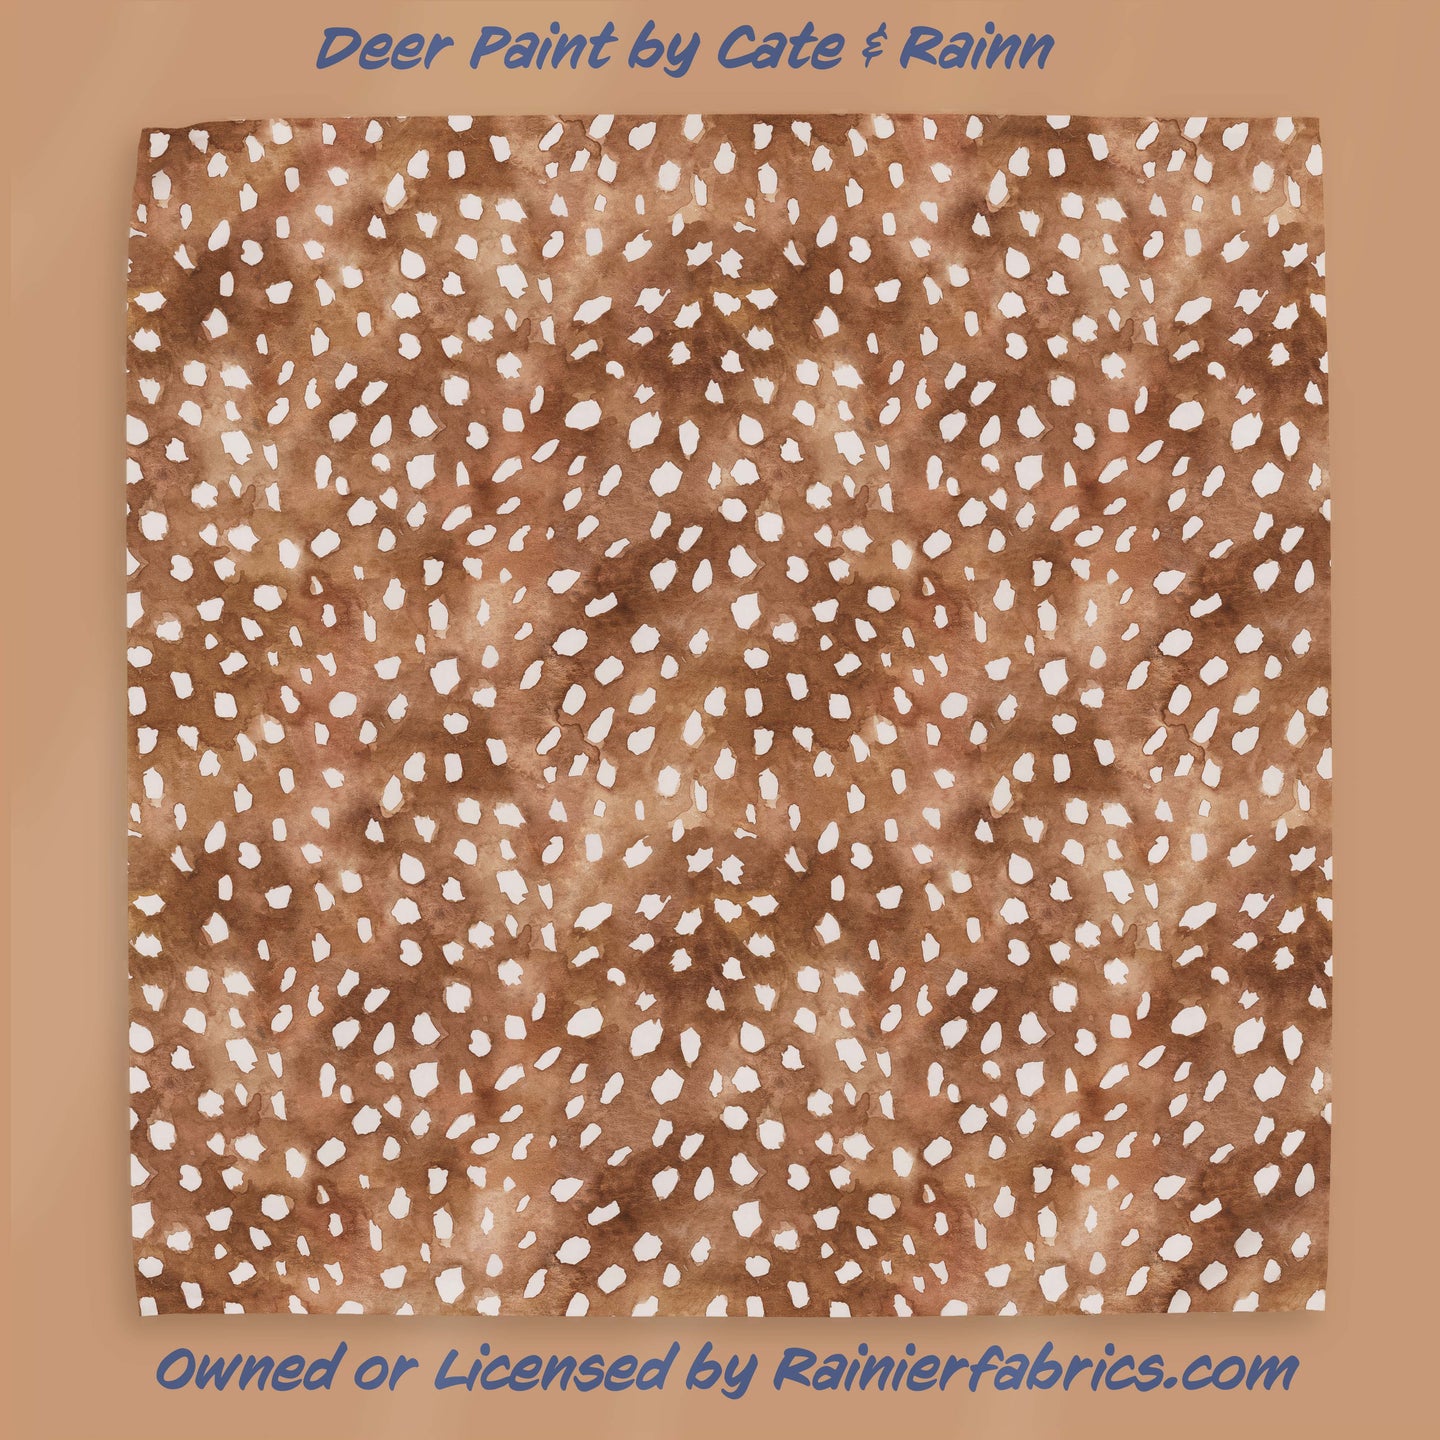 Deer Paint by Cate & Rainn  - 2-5 day turnaround - Order by 1/2 yard; Description of bases below